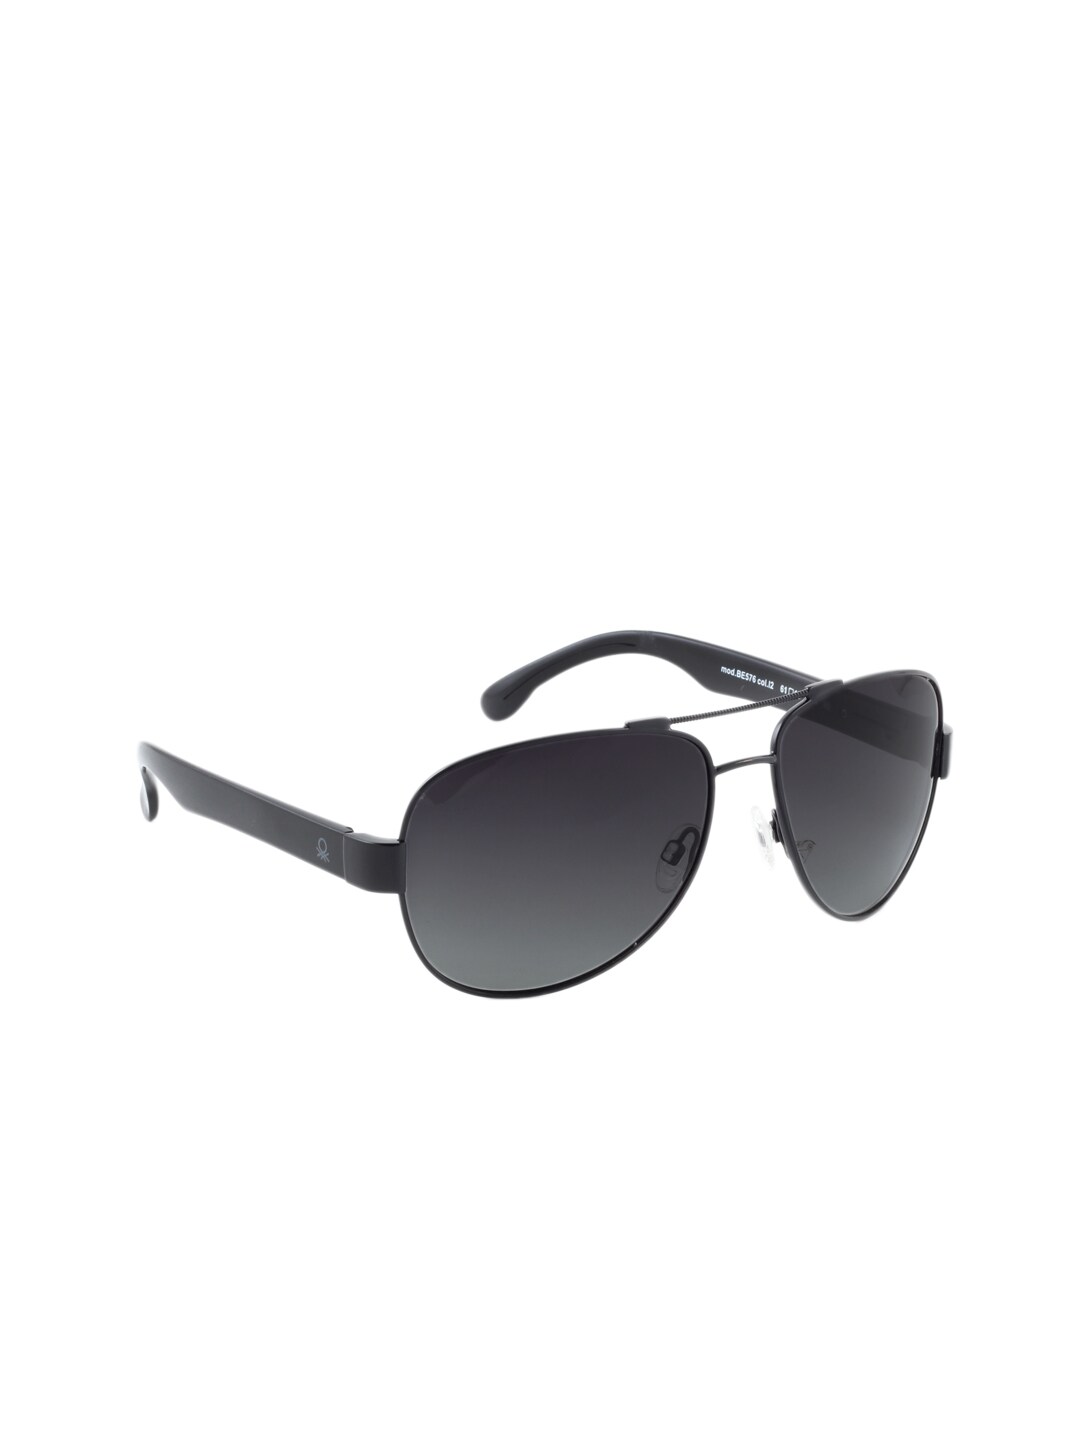 United Colors of Benetton Men Black Sunglasses